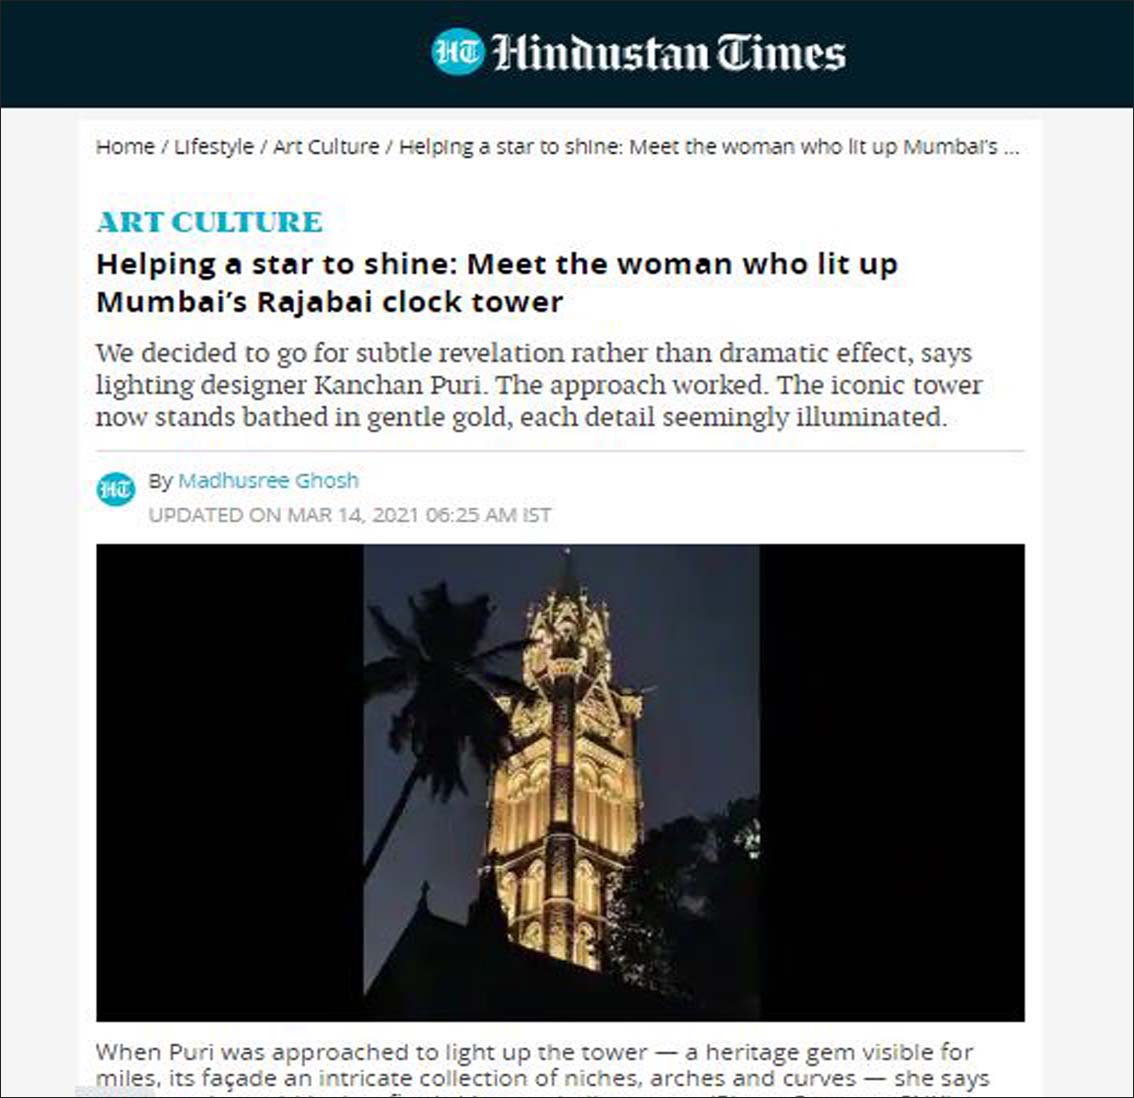 Helping a star to shine: Meet the woman who lit up Mumbai’s Rajabai clock tower